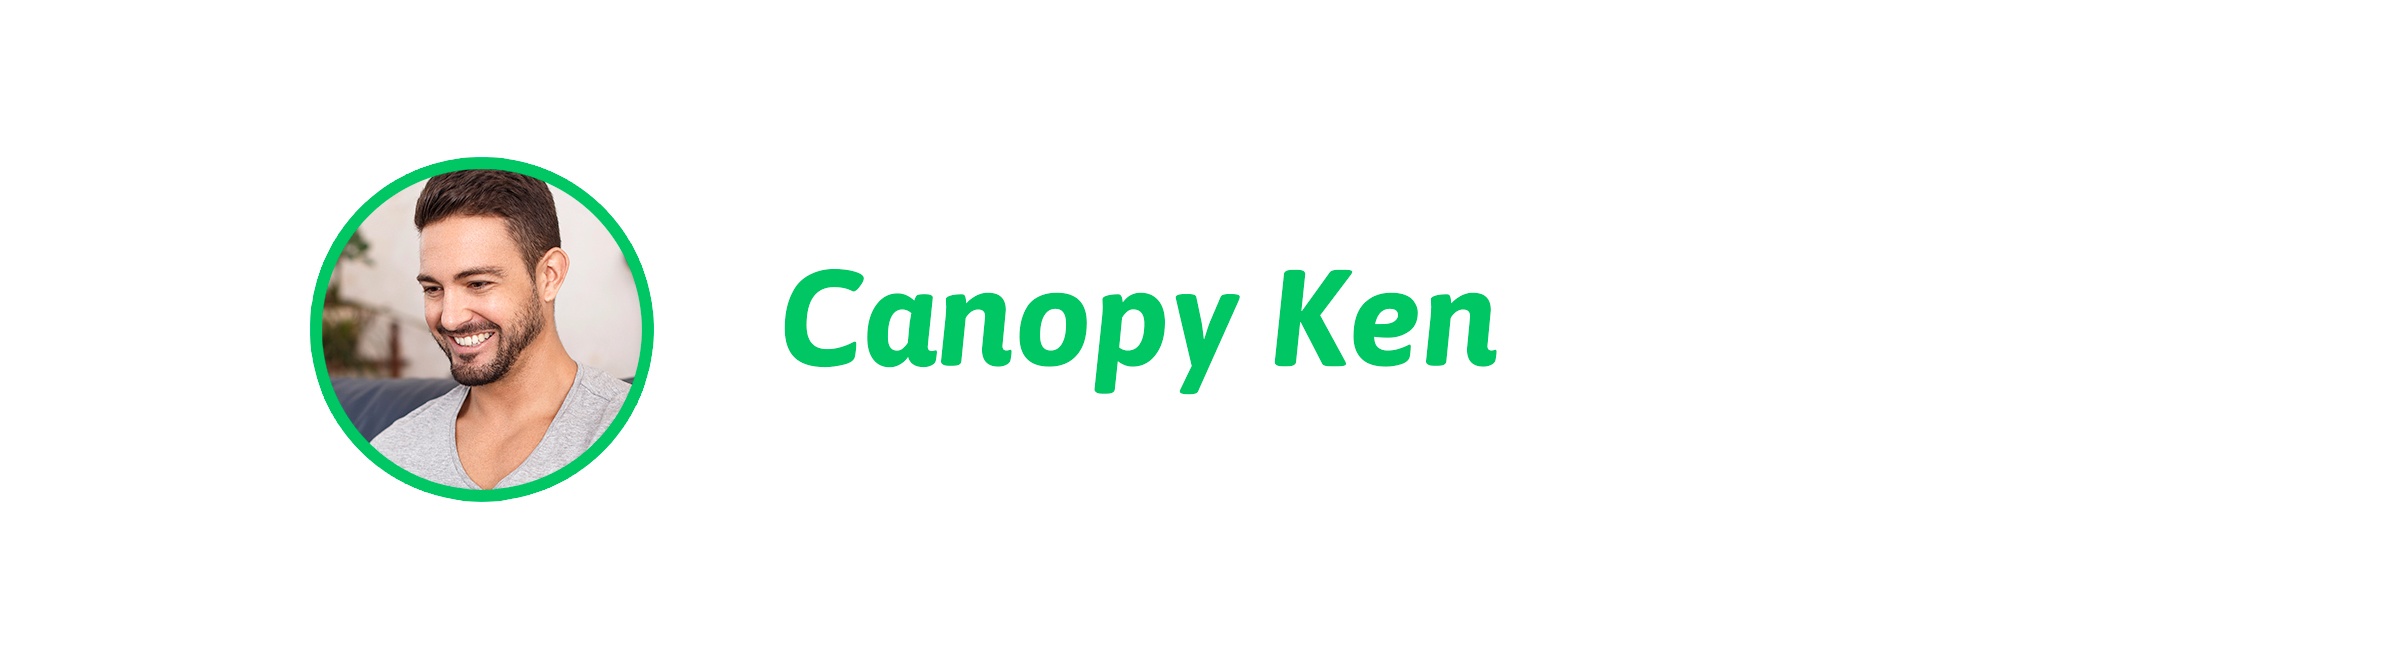 Canopy ken